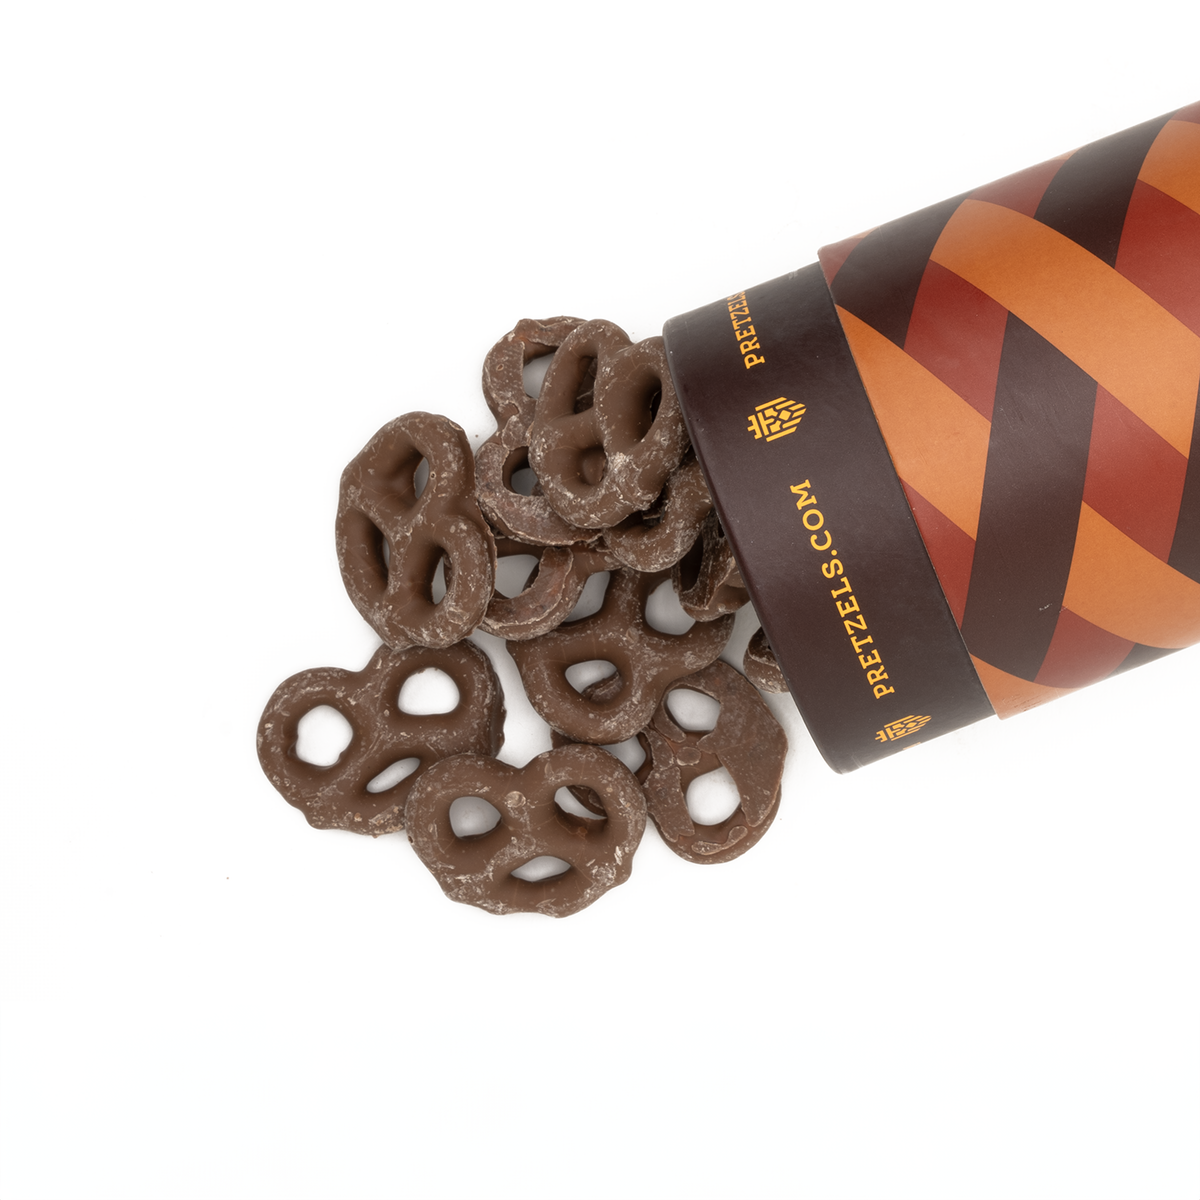 Belgian Chocolate Pretzel Gift Box